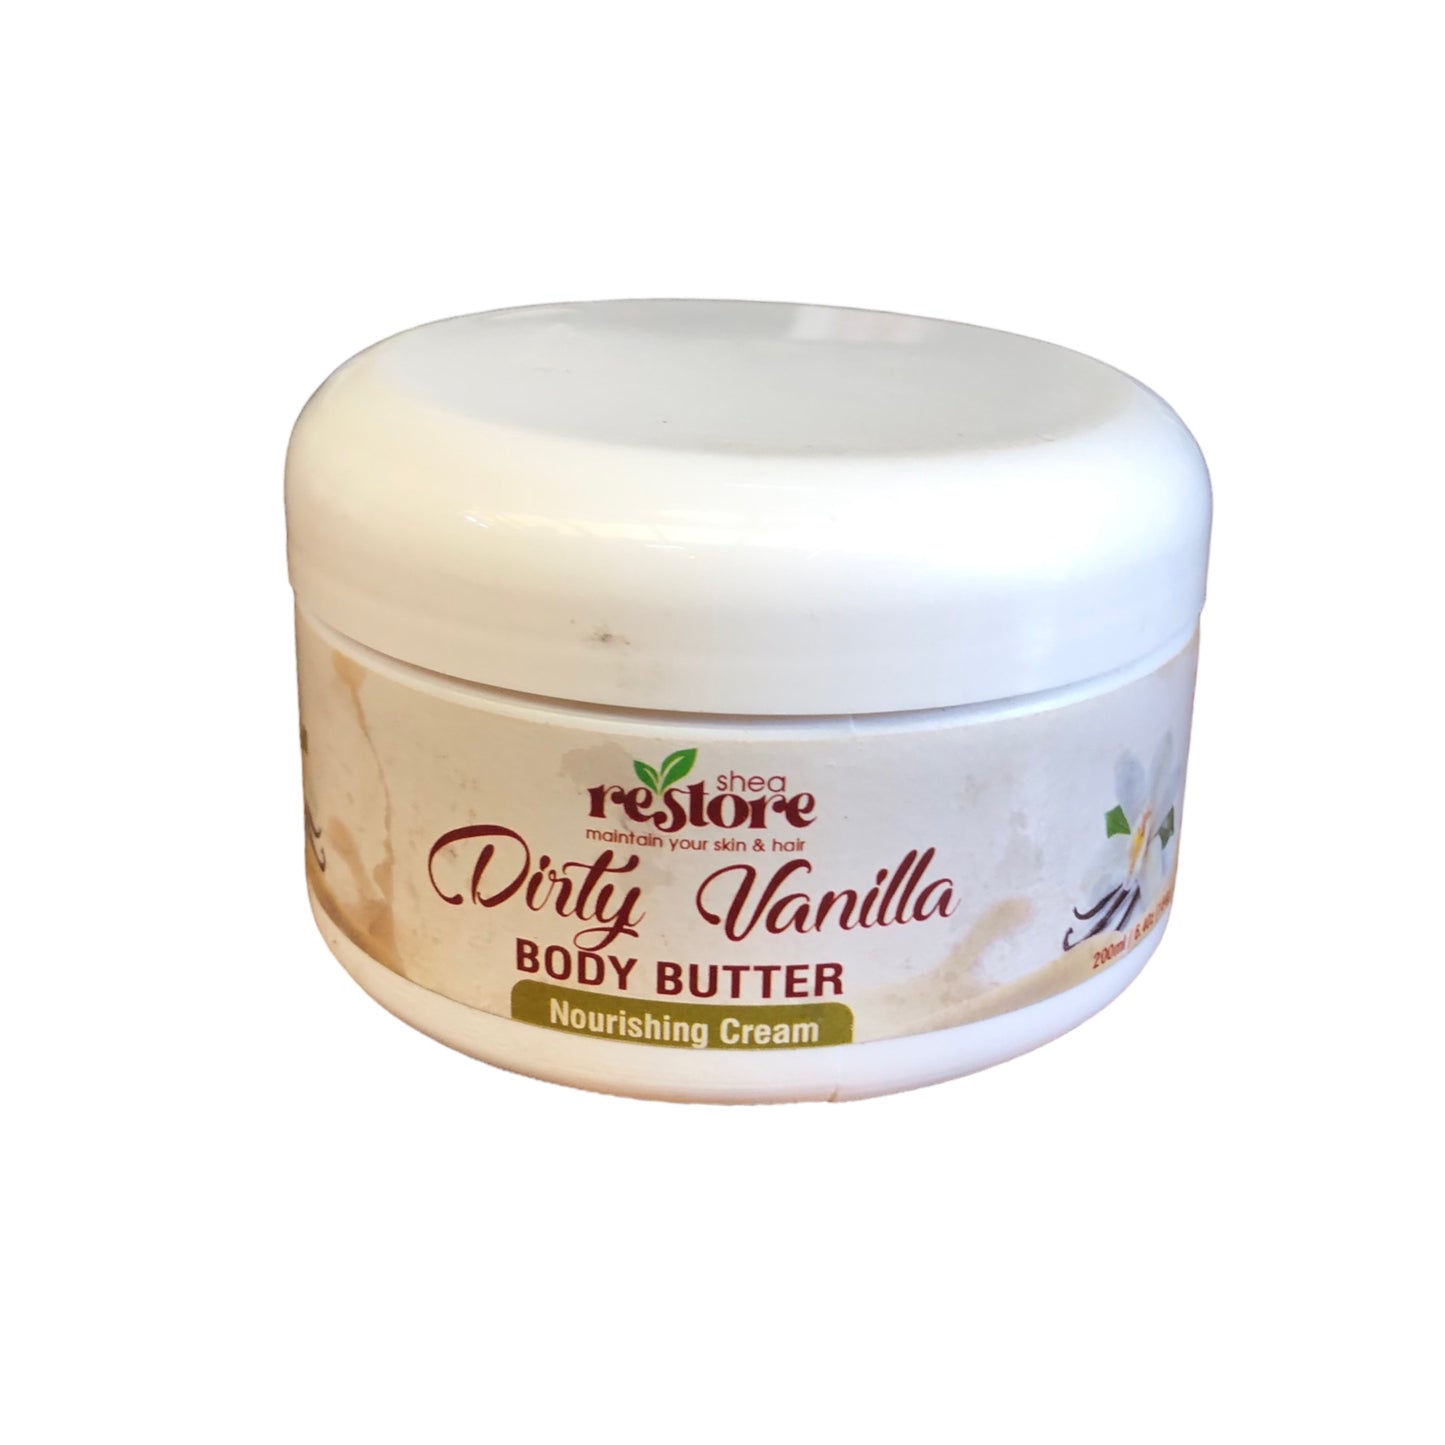 Dirty Vanilla Body Butter Cream